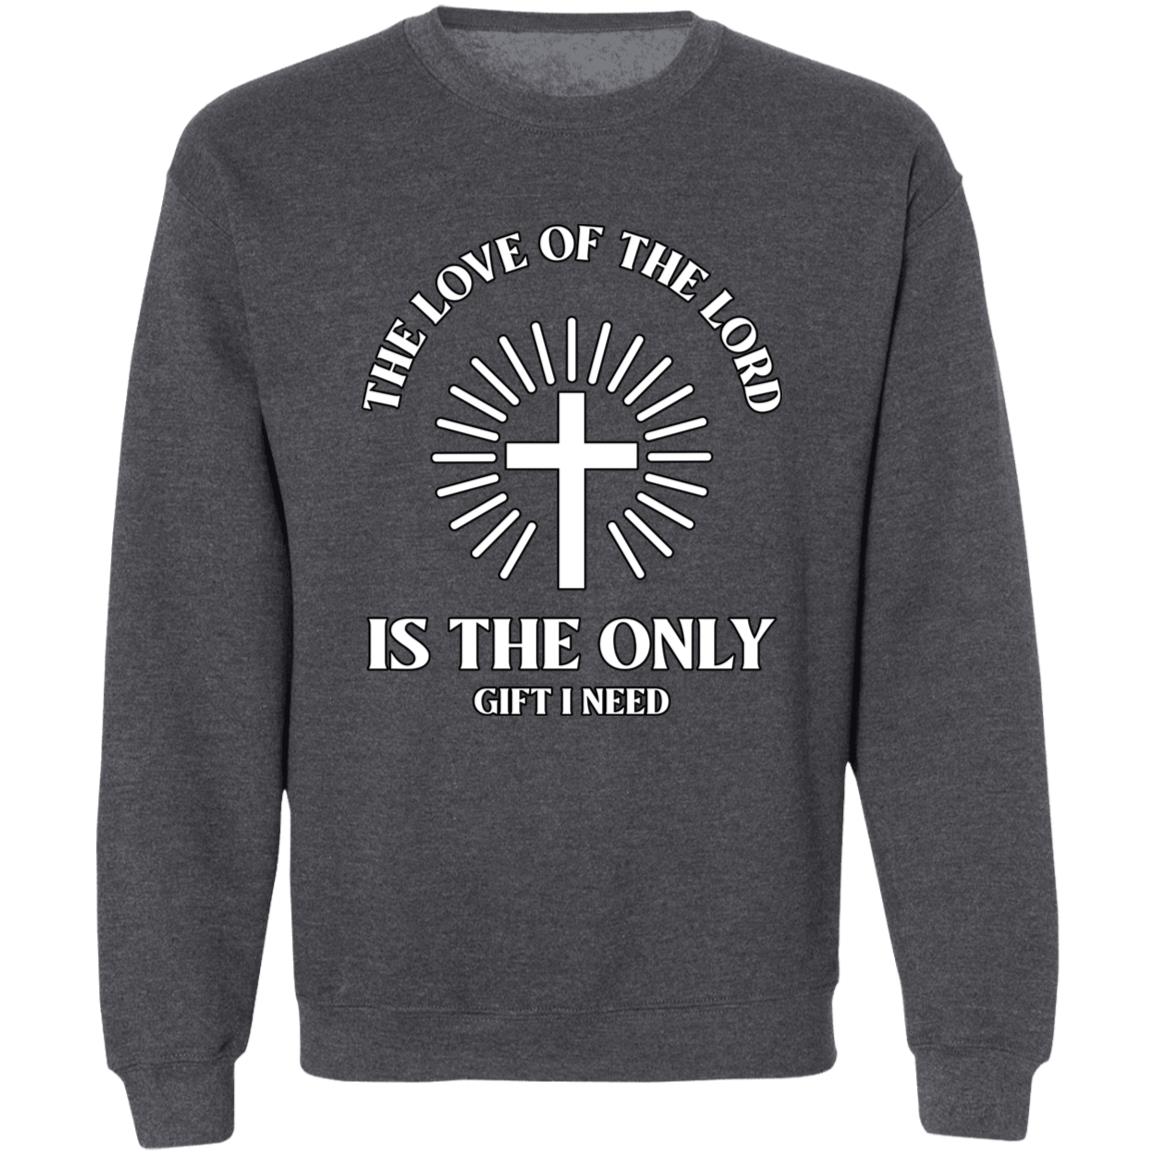 Love of the Lord (Unisex Sweatshirt)